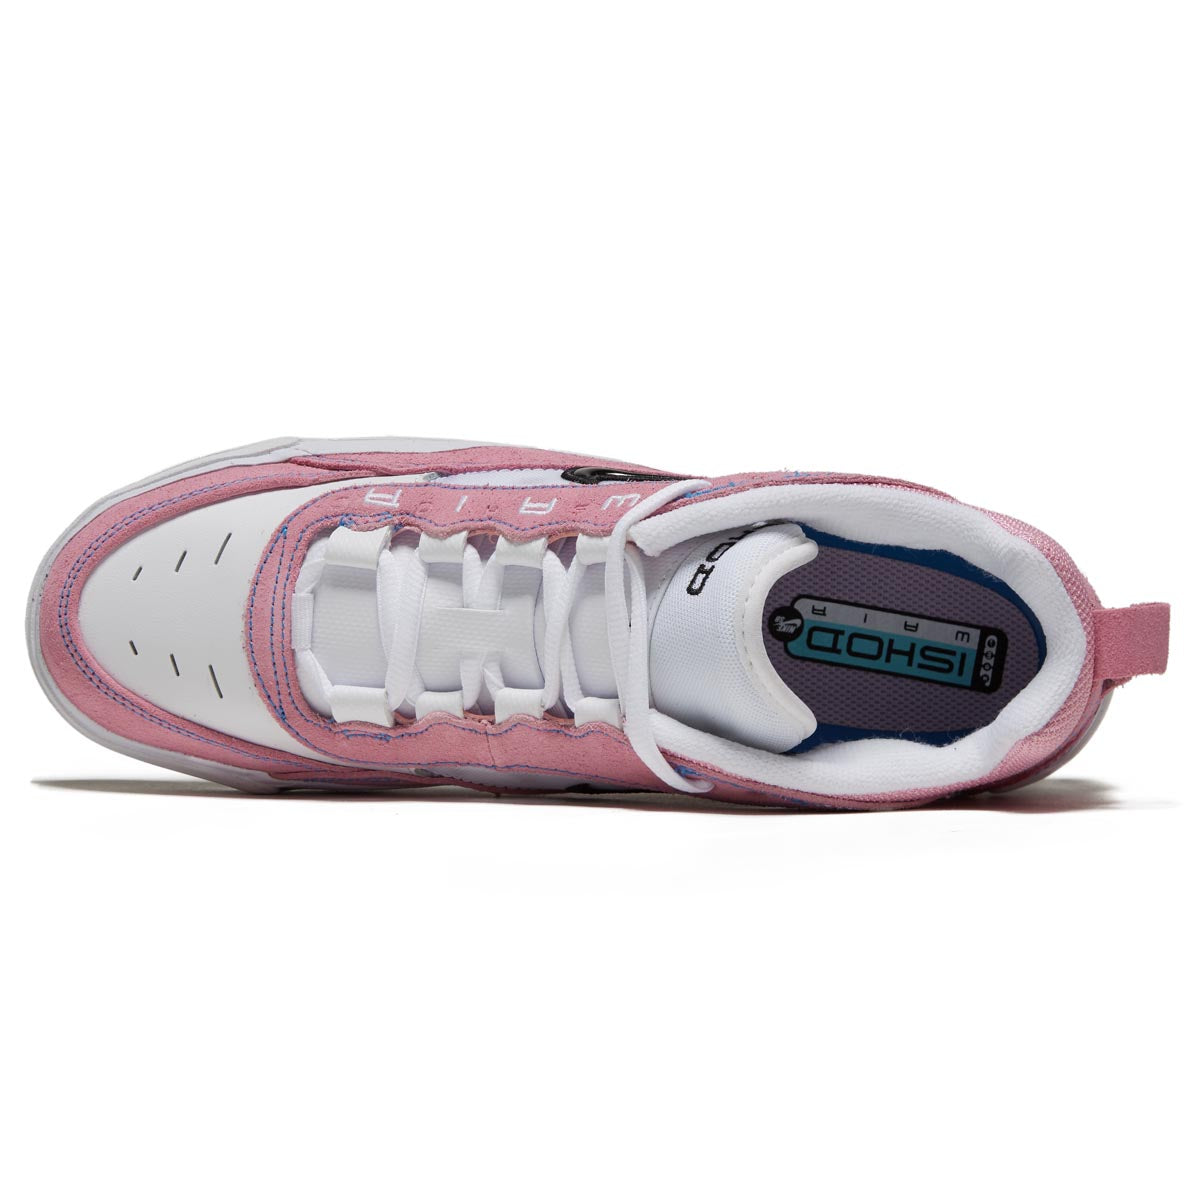 Nike SB Air Max Ishod Shoes - Pink Foam /Black/White/Light Photo Blue image 3